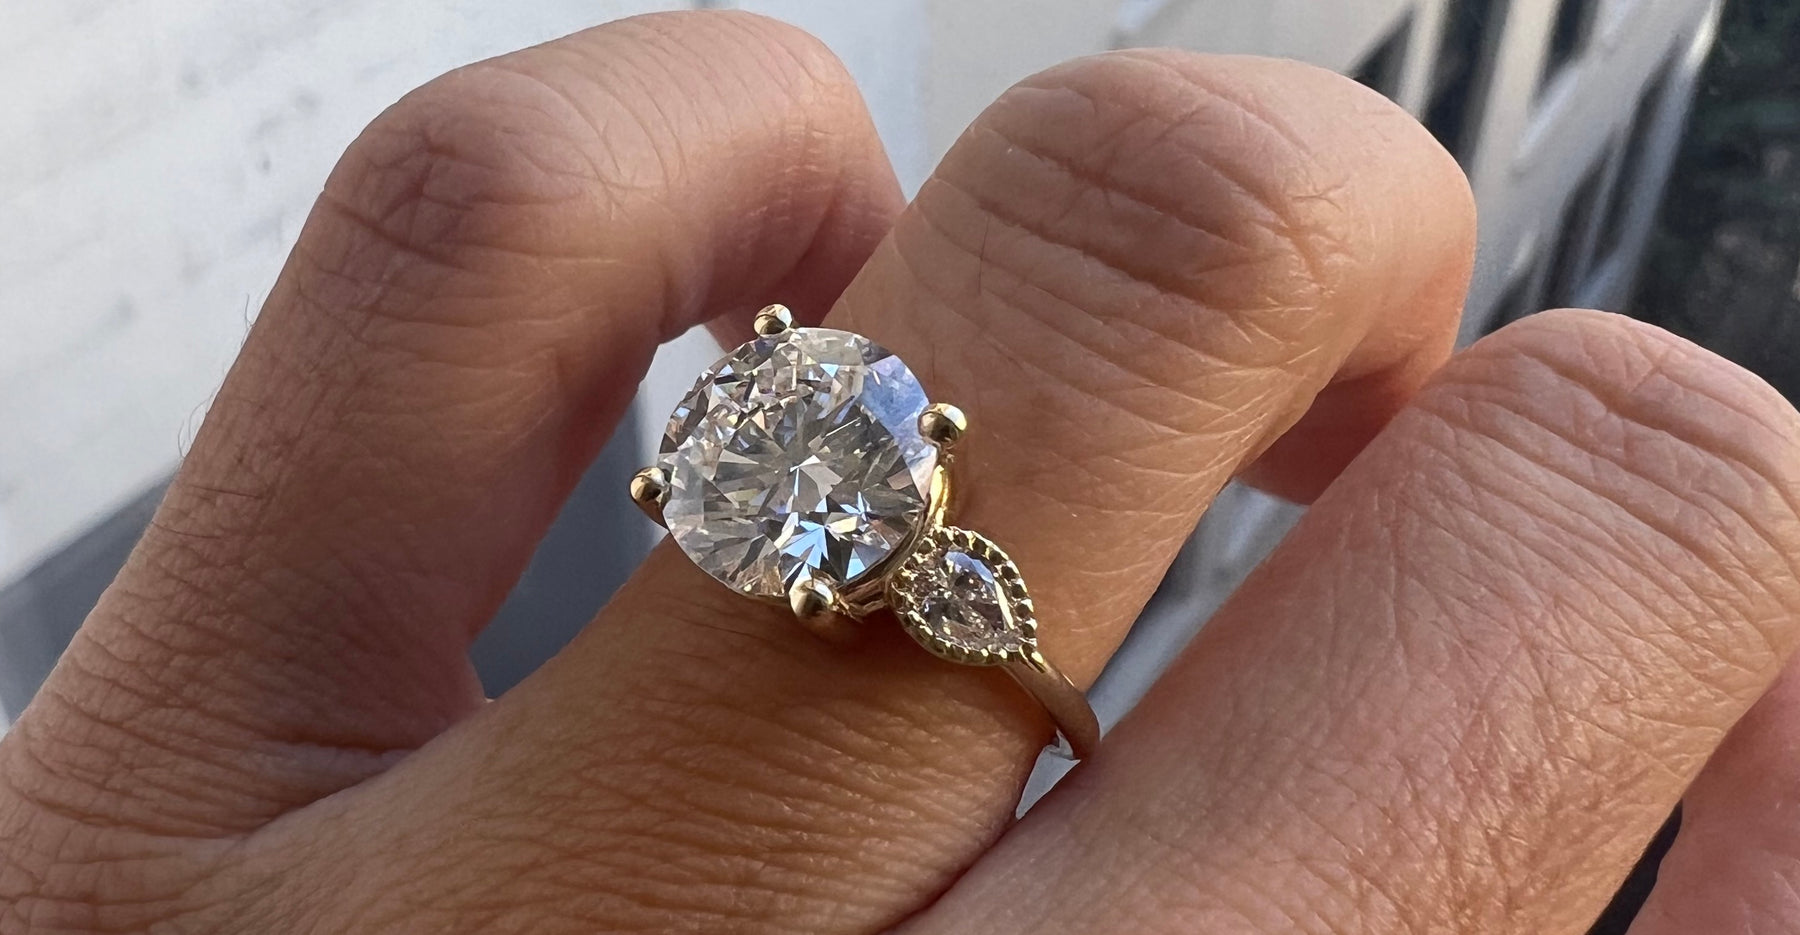 14k yellow gold custom engagement ring with round white diamond center stone and pear diamonds